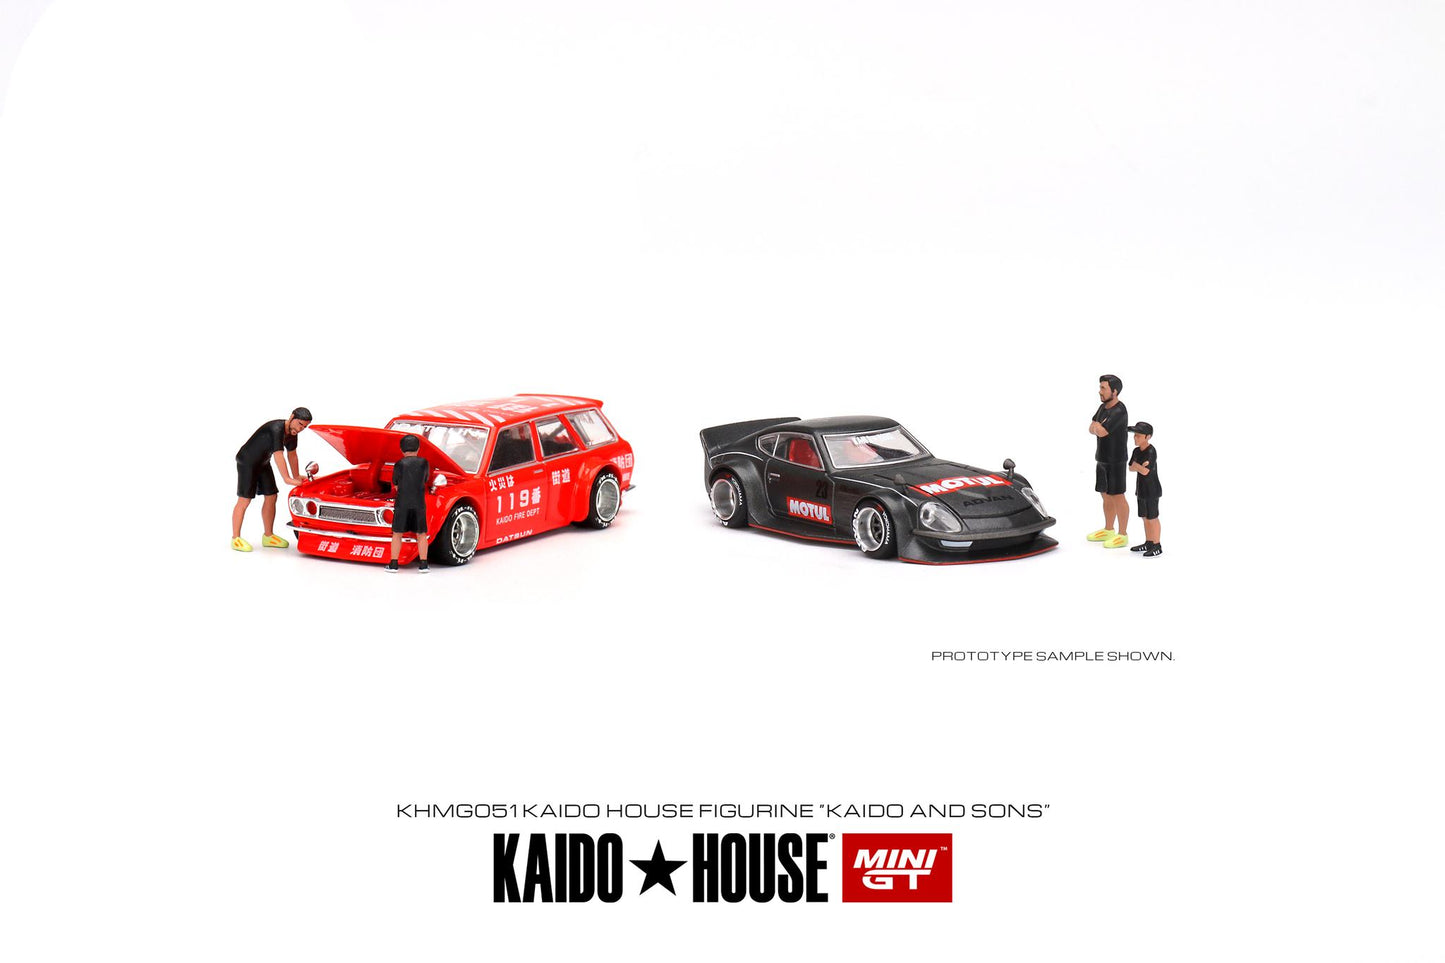 Mini GT x Kaido House Kaido & Sons Figures